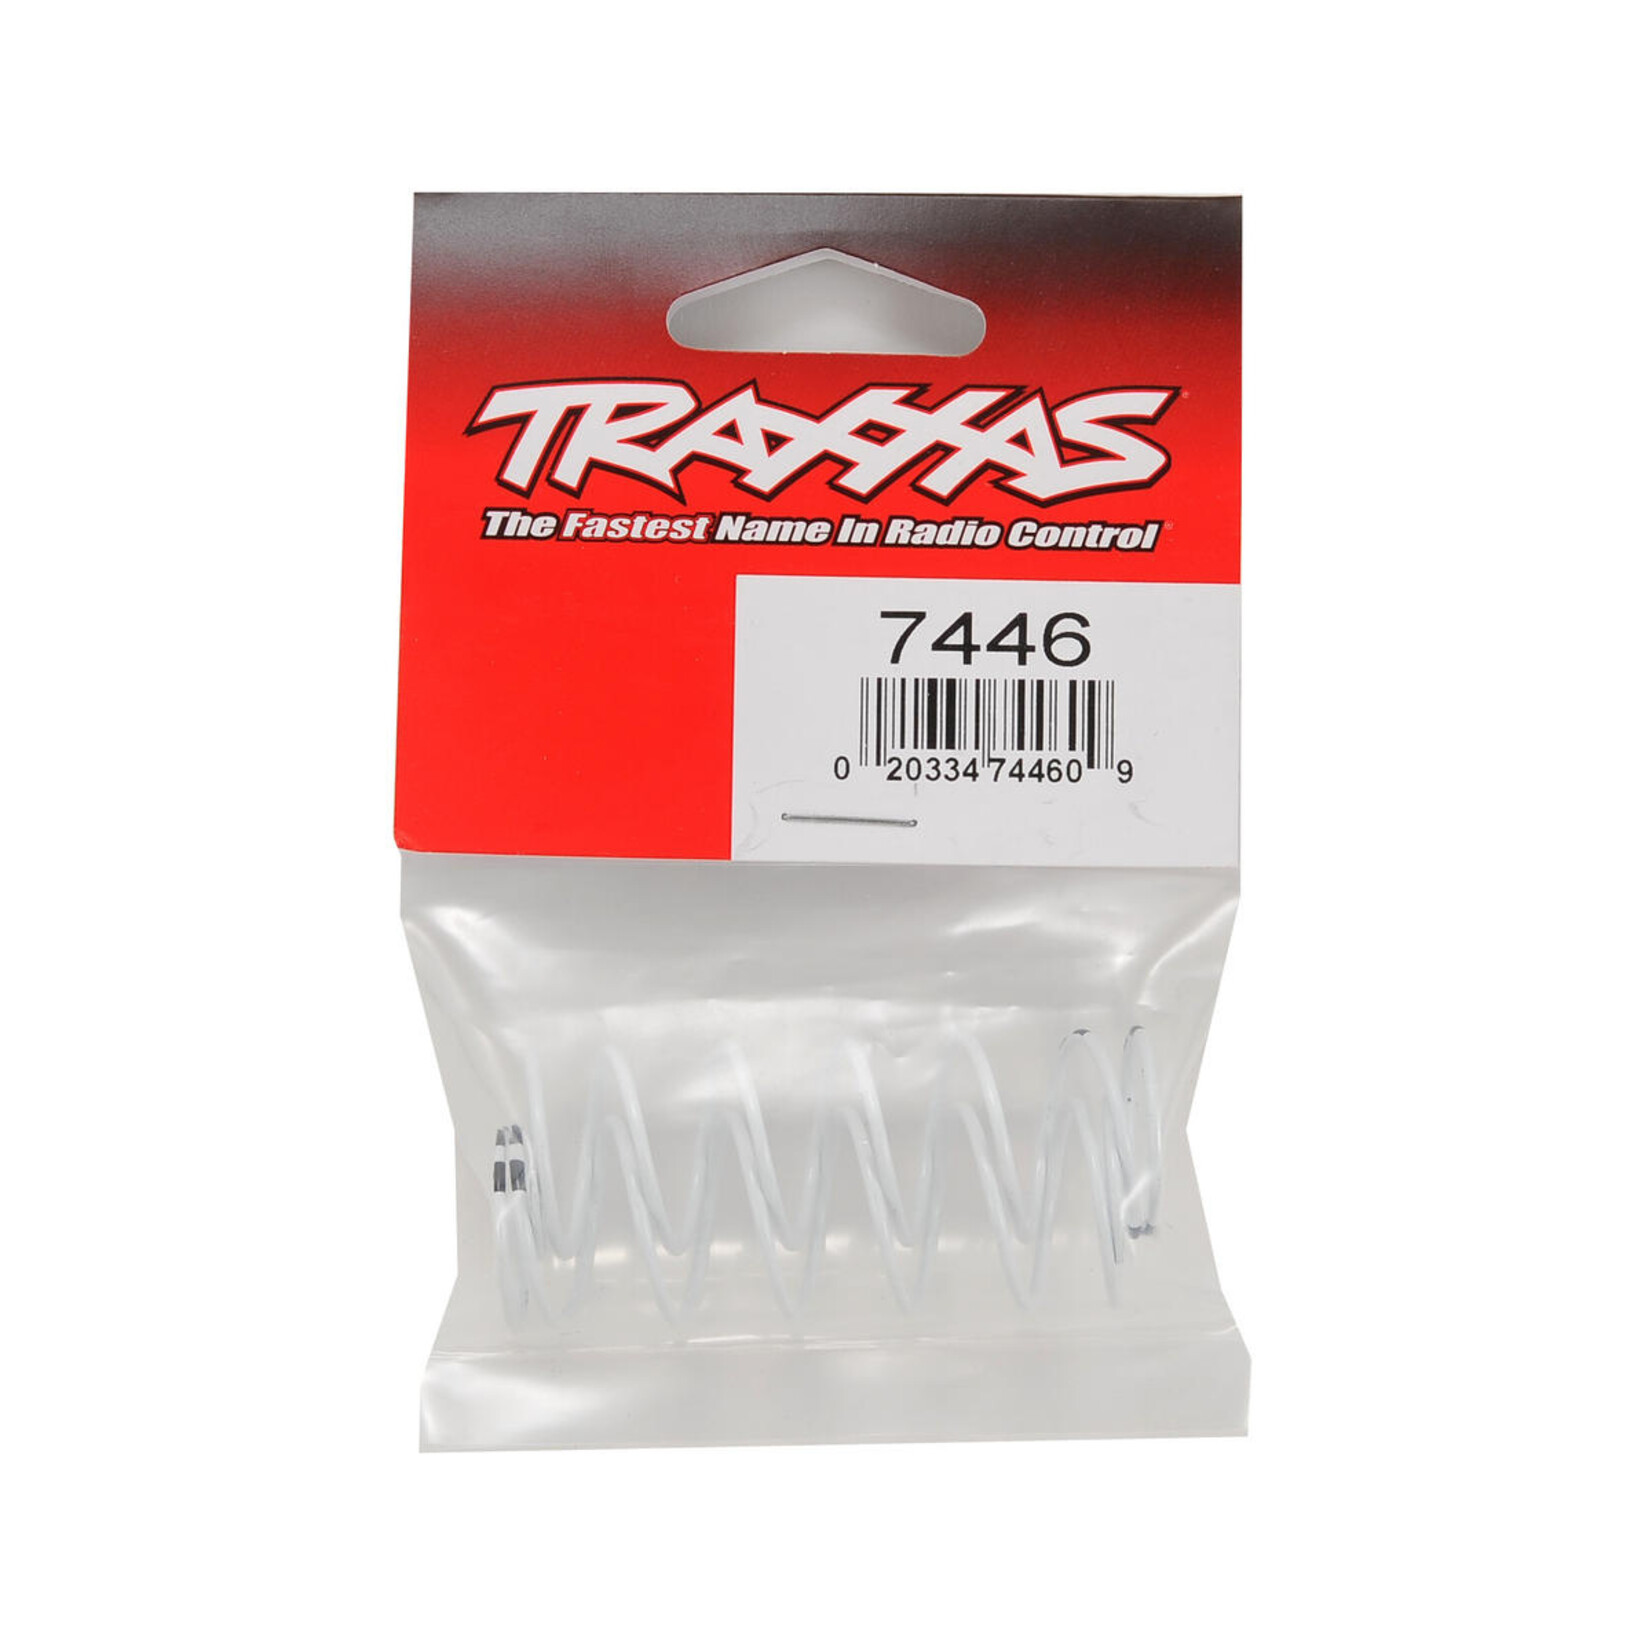 Traxxas Traxxas Progressive Rate XX-Long GTR Shock Springs (Black - 0.874 Rate) (2) #7446